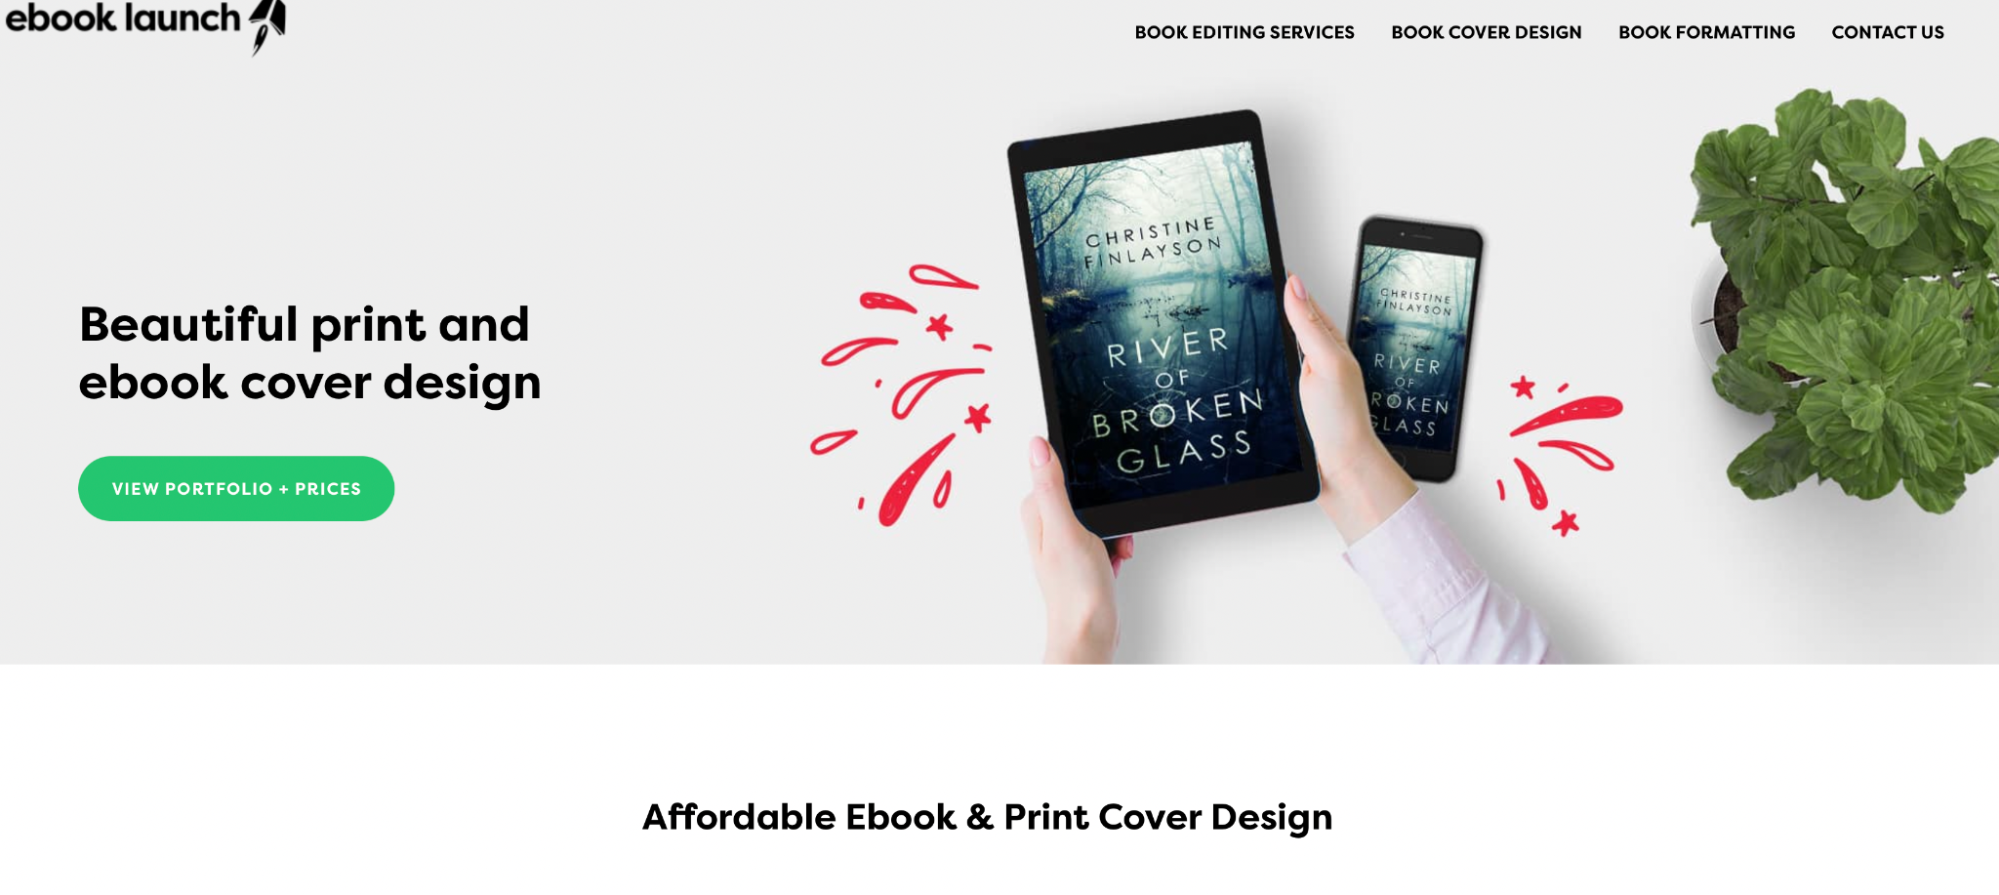 ebook launch book cover design website